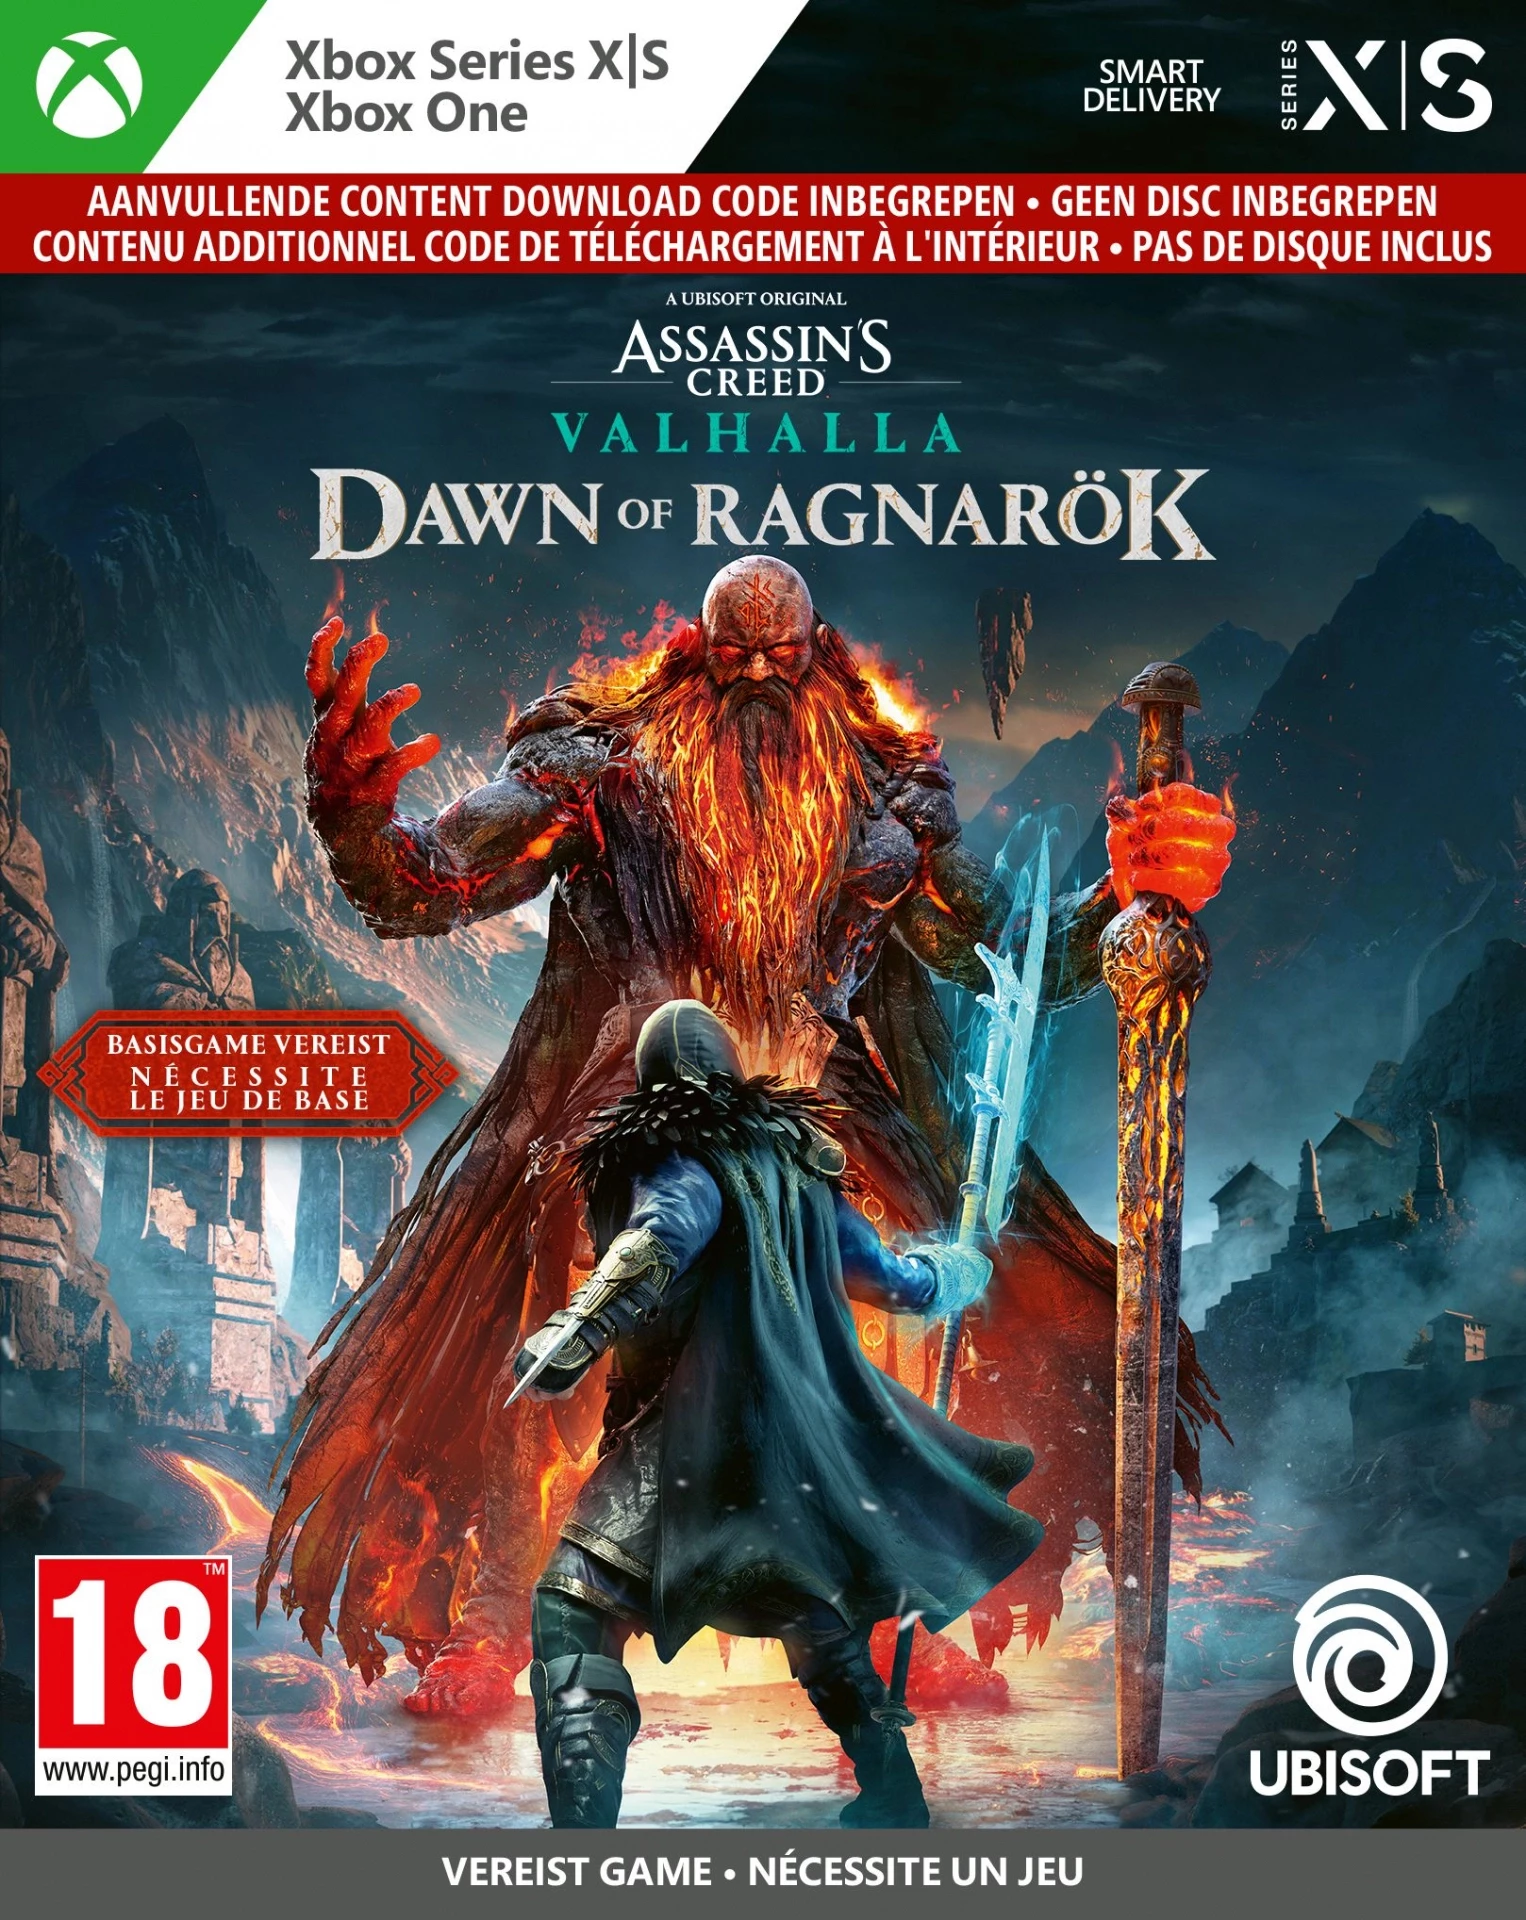 Assassin's Creed Valhalla Dawn of Ragnarök (add-on)(Code in a Box) voor de Xbox One preorder plaatsen op nedgame.nl